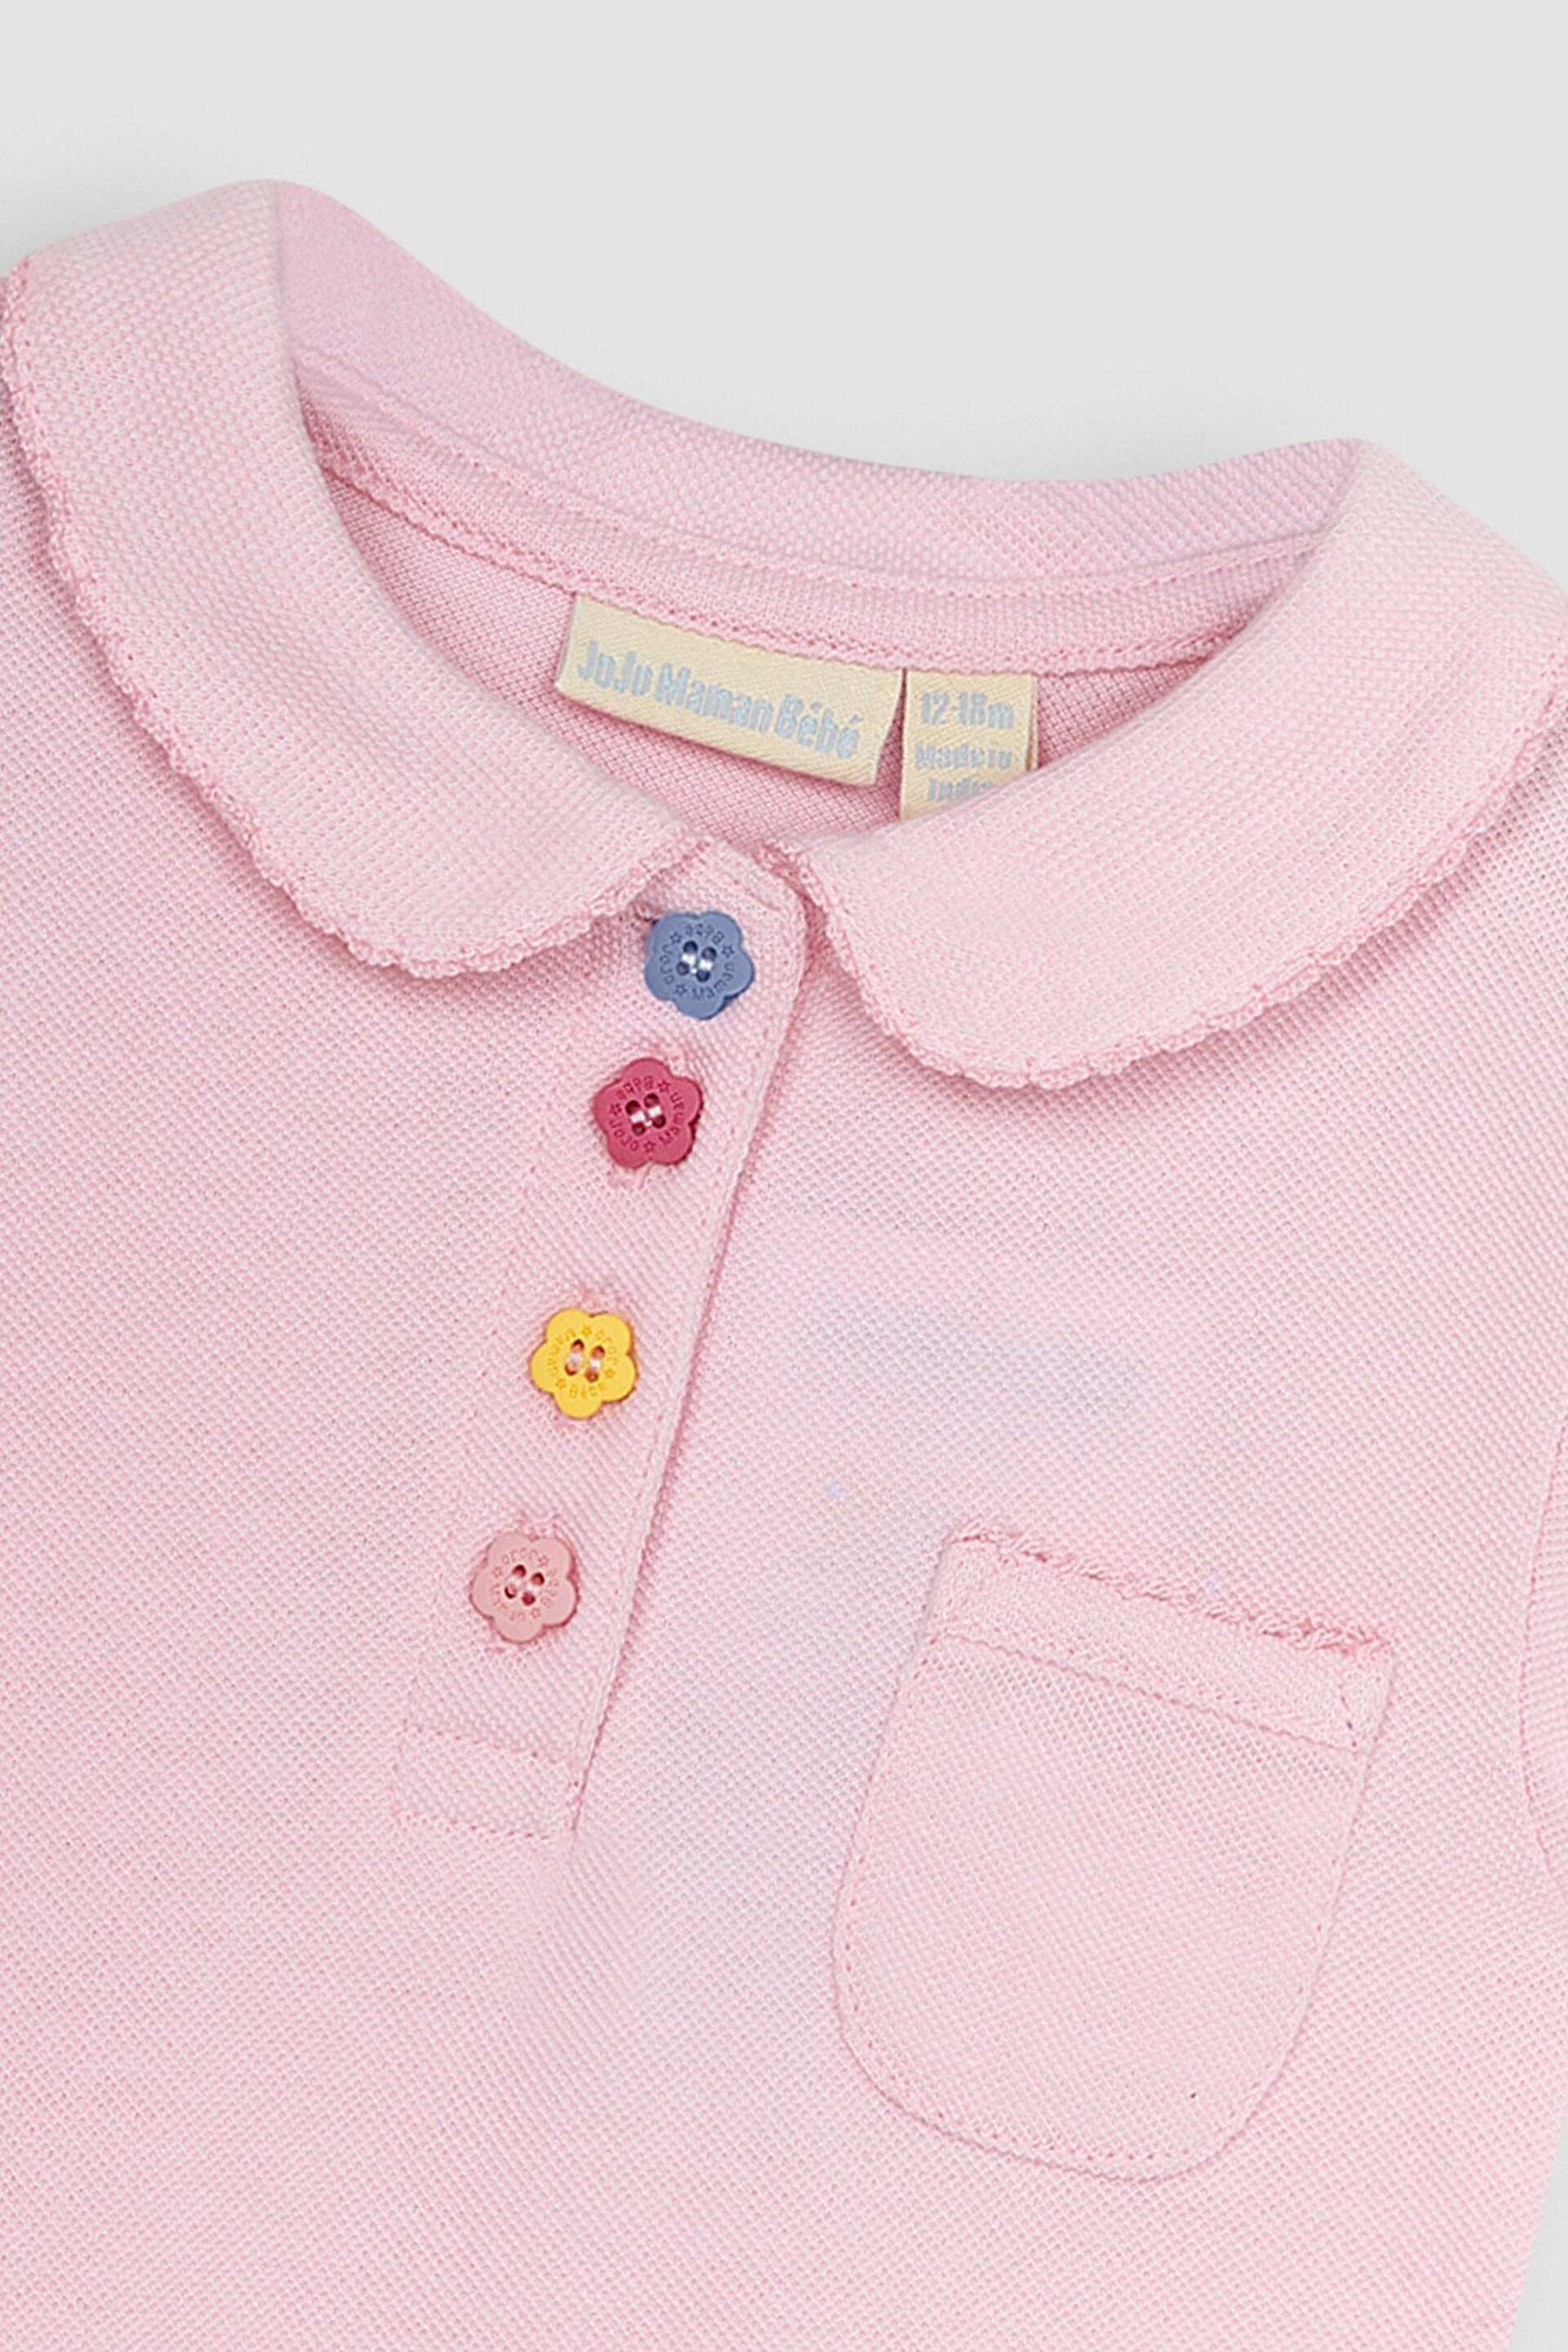 JoJo Maman Bébé Pink Pretty Polo Shirt - Image 2 of 3